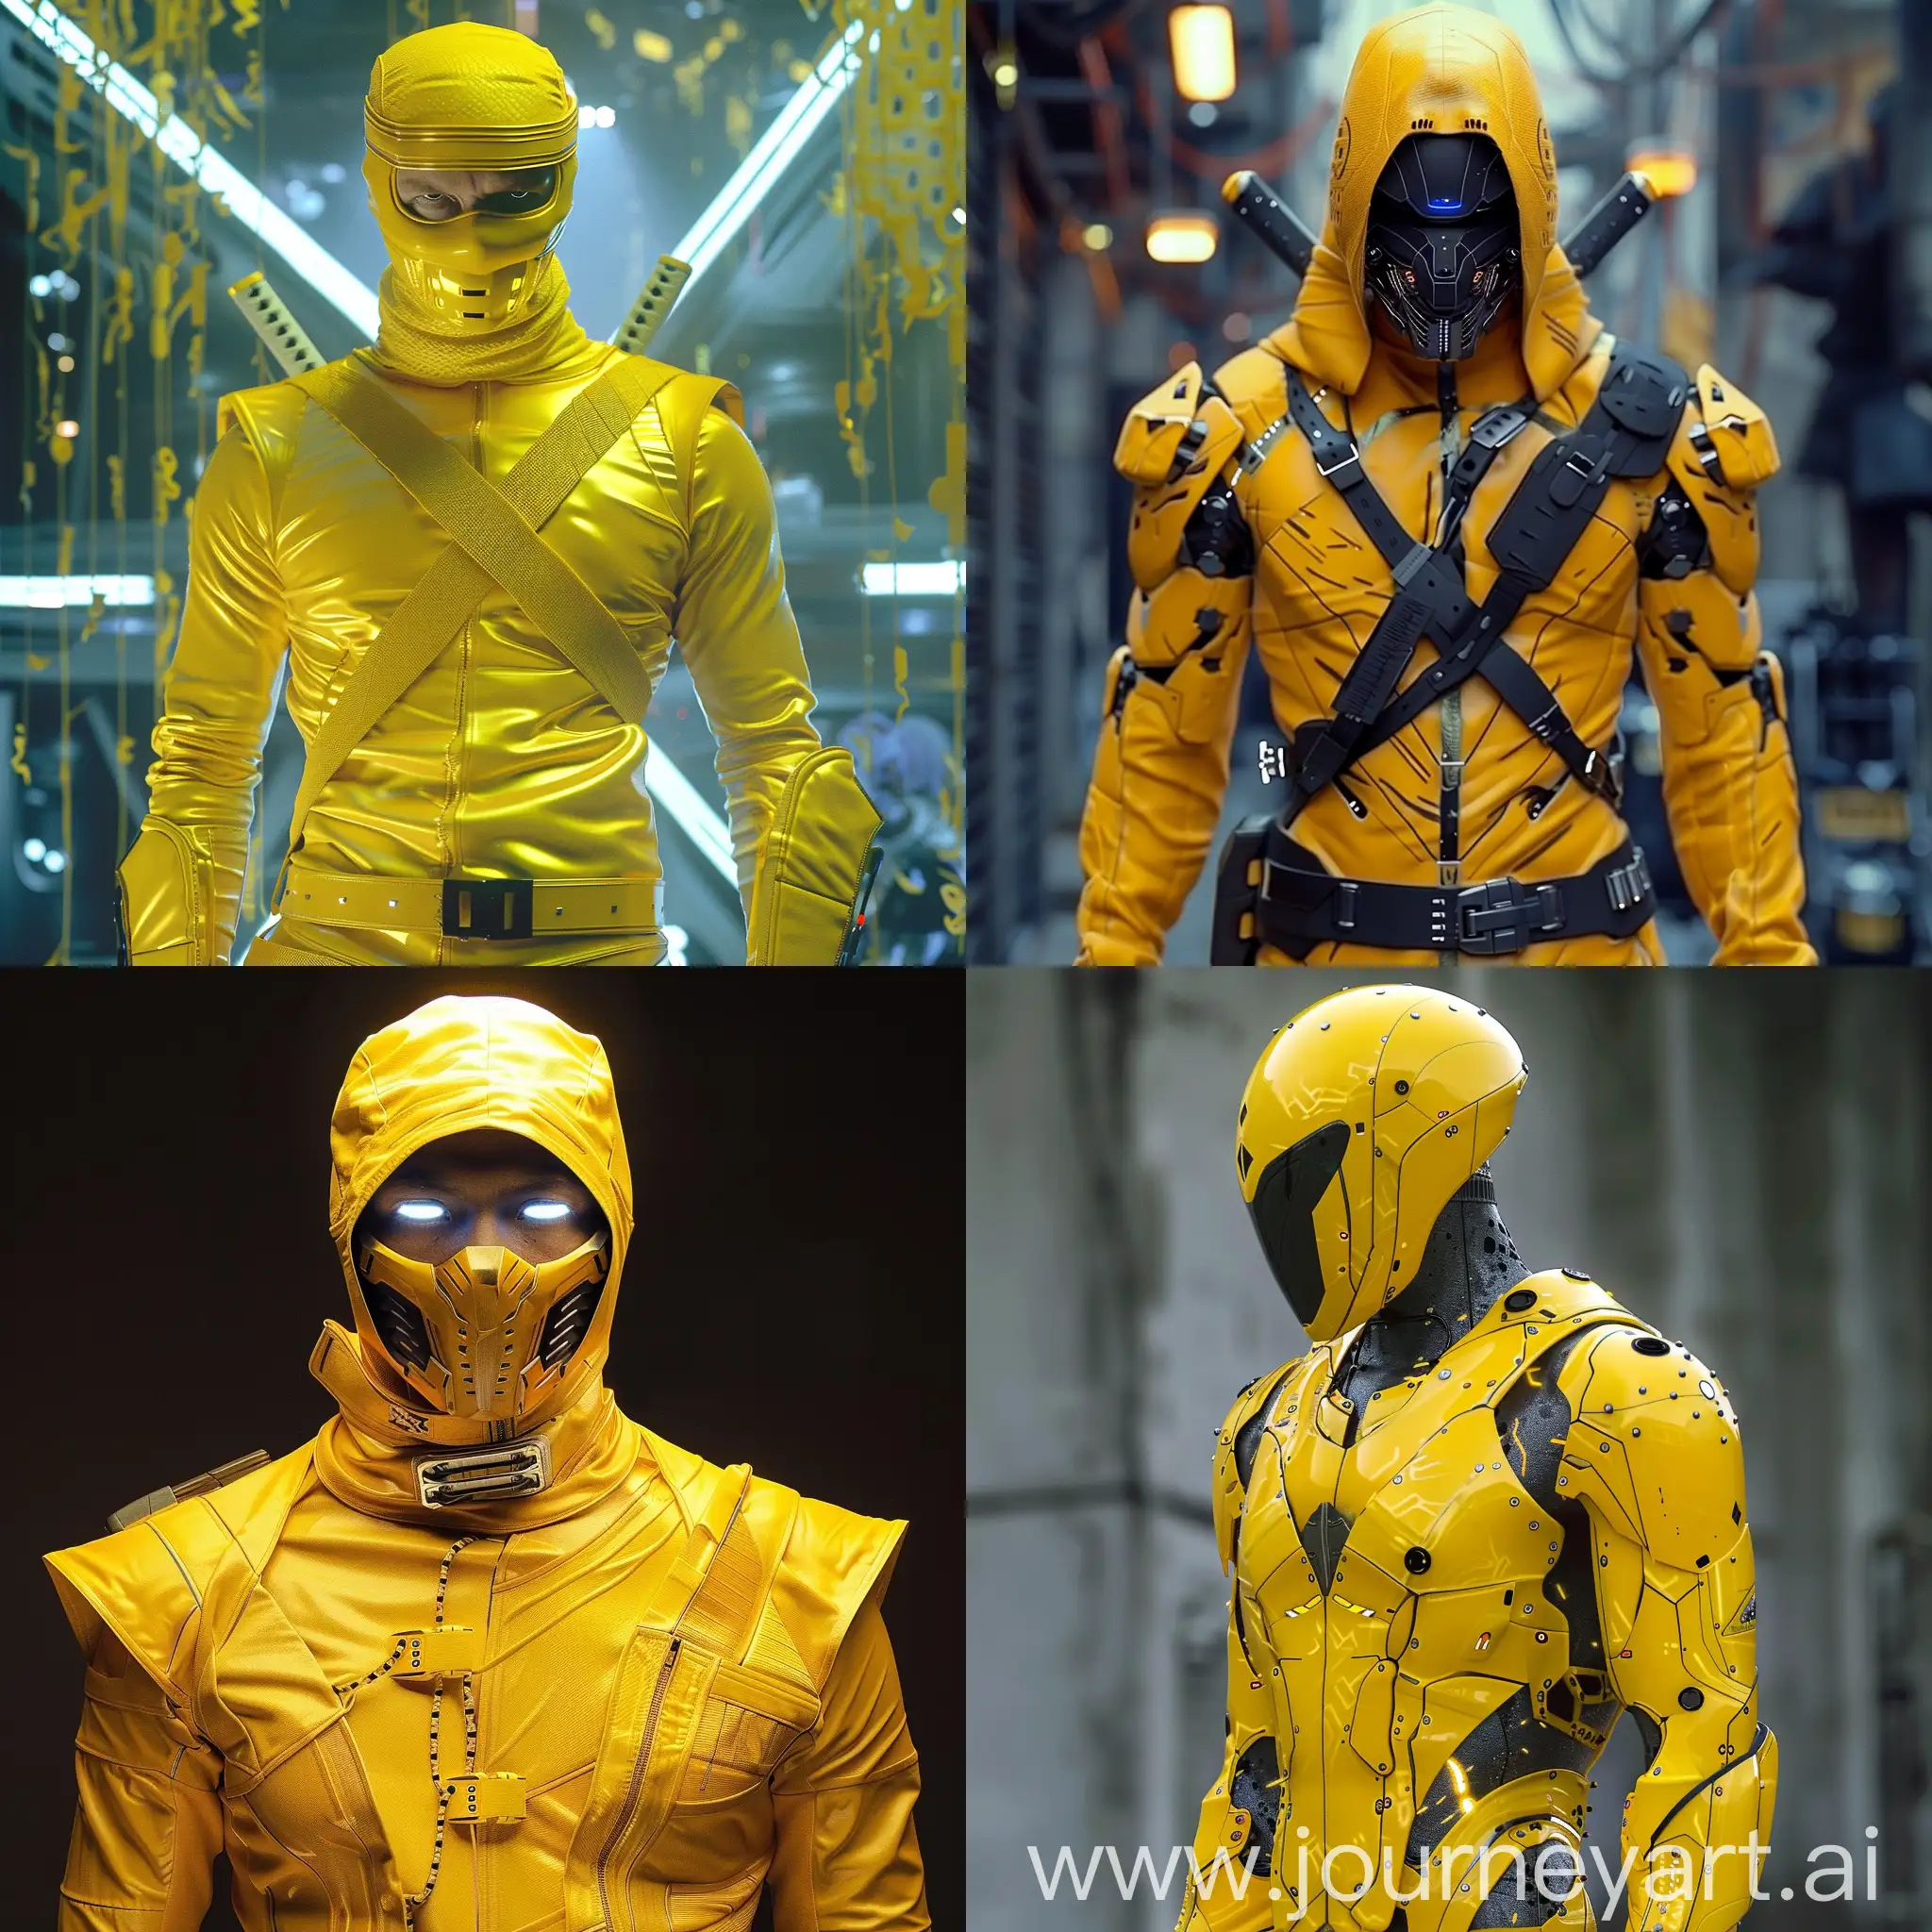 Futuristic-Ninja-in-Yellow-Costume-Vibrant-and-Dynamic-Masterpiece